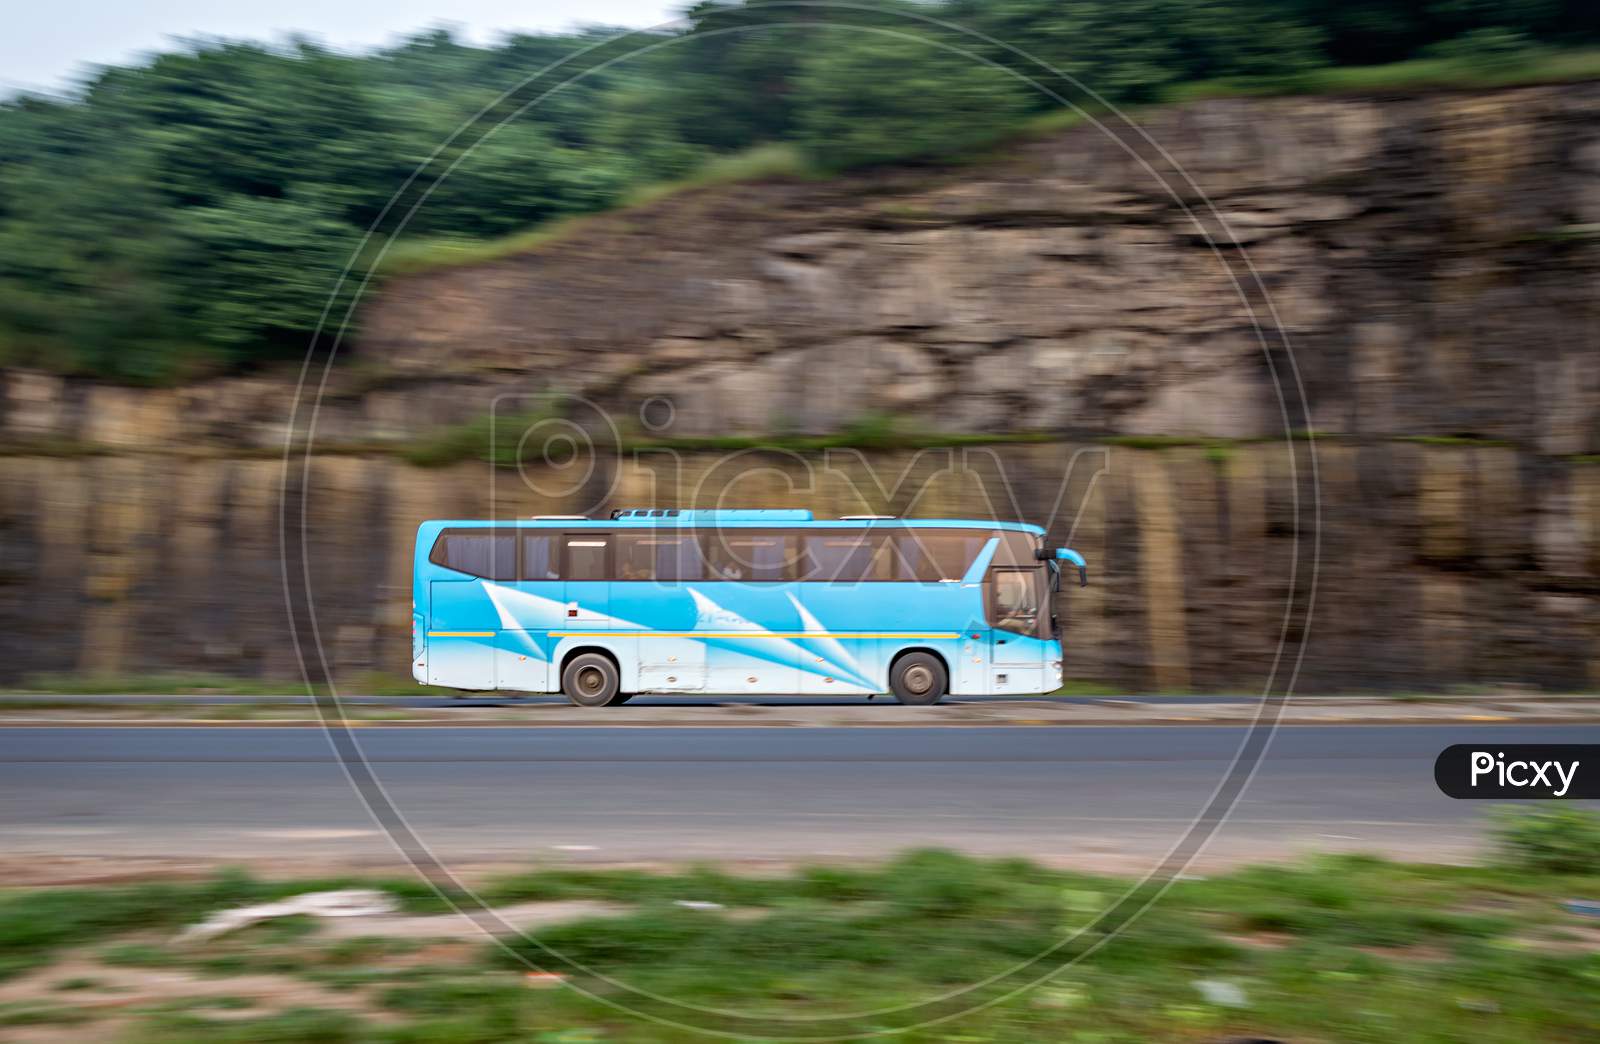 Pan Image With Blur Background Of Of A Speeding Msrtc Ac Scania Bus , Speeding Towards Mumbai.